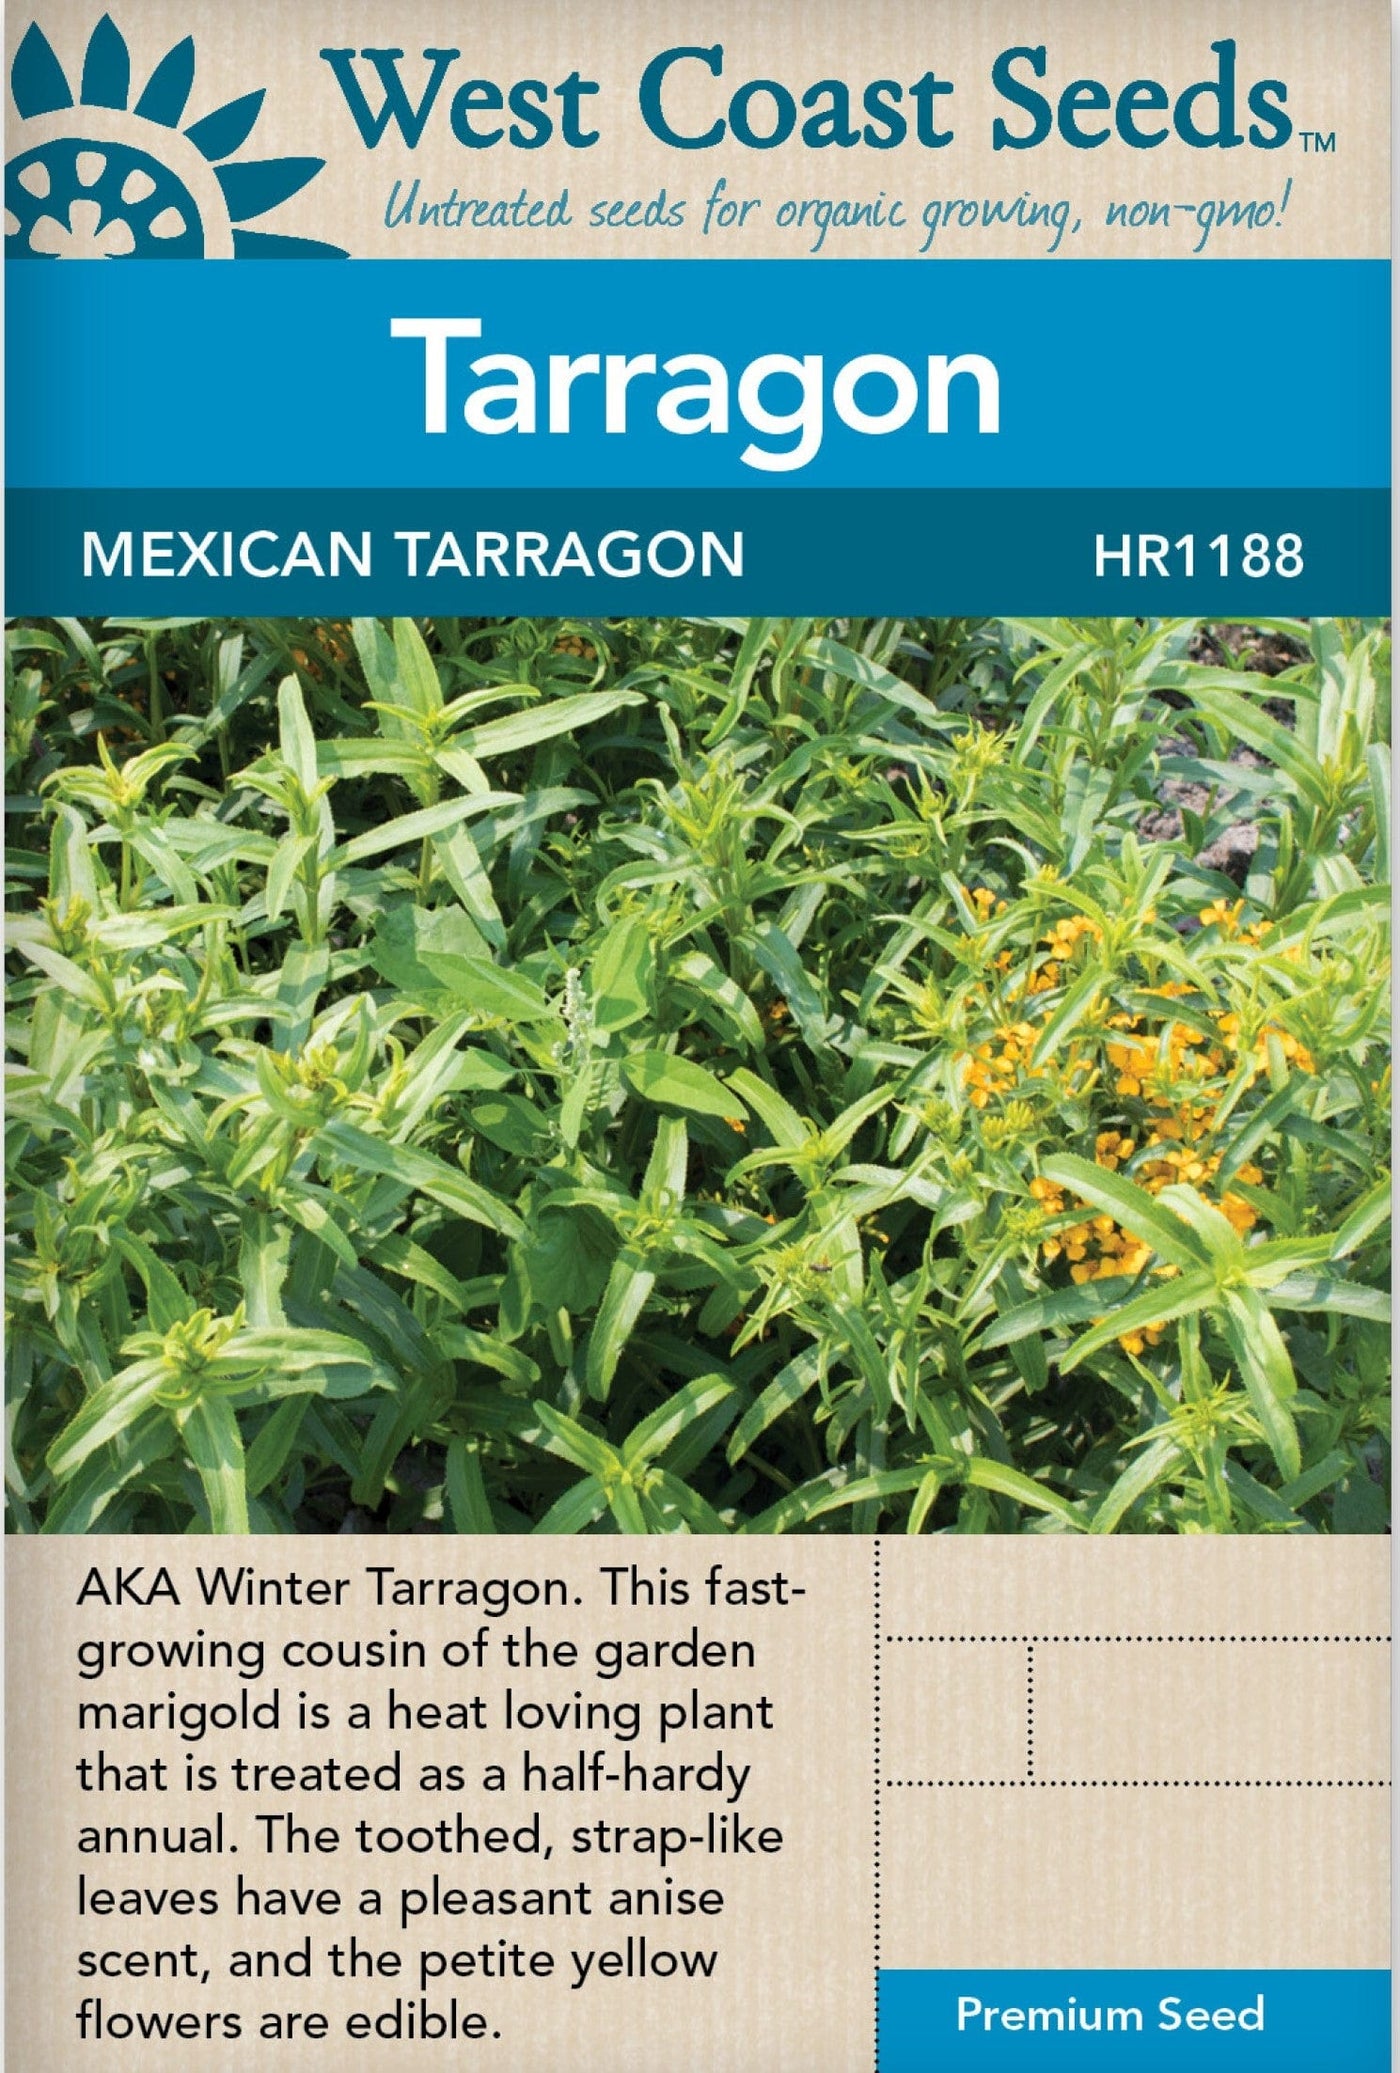 Tarragon Mexican - West Coast Seeds Ltd